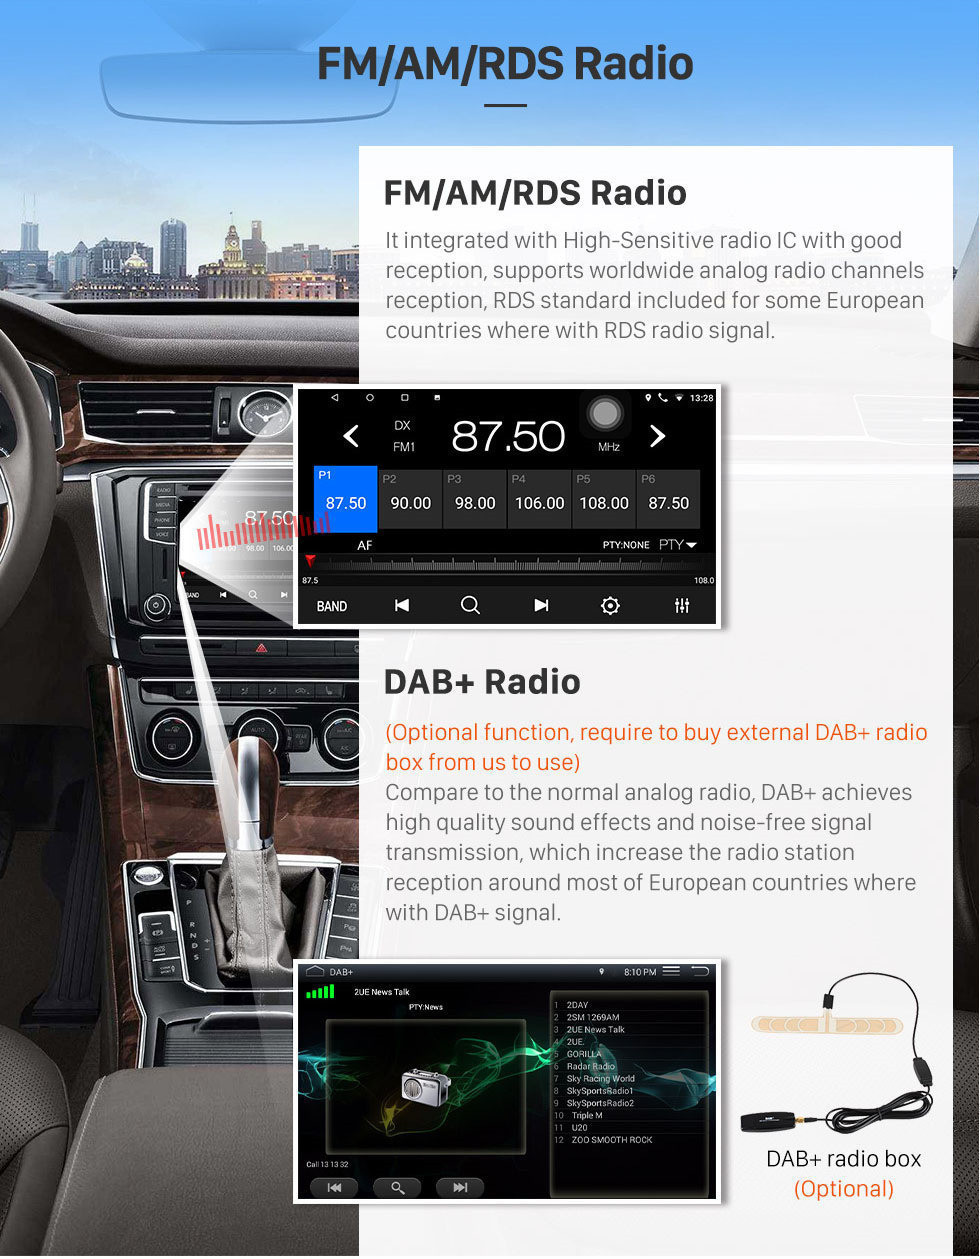 Seicane Pantalla táctil HD de 9 pulgadas Android 10.0 Radio GPS Navi unidad principal Reemplazo para 2016 Hyundai Elantra LHD Soporte USB WIFI Radio Bluetooth Mirror Link DVR OBD2 TPMS Aux